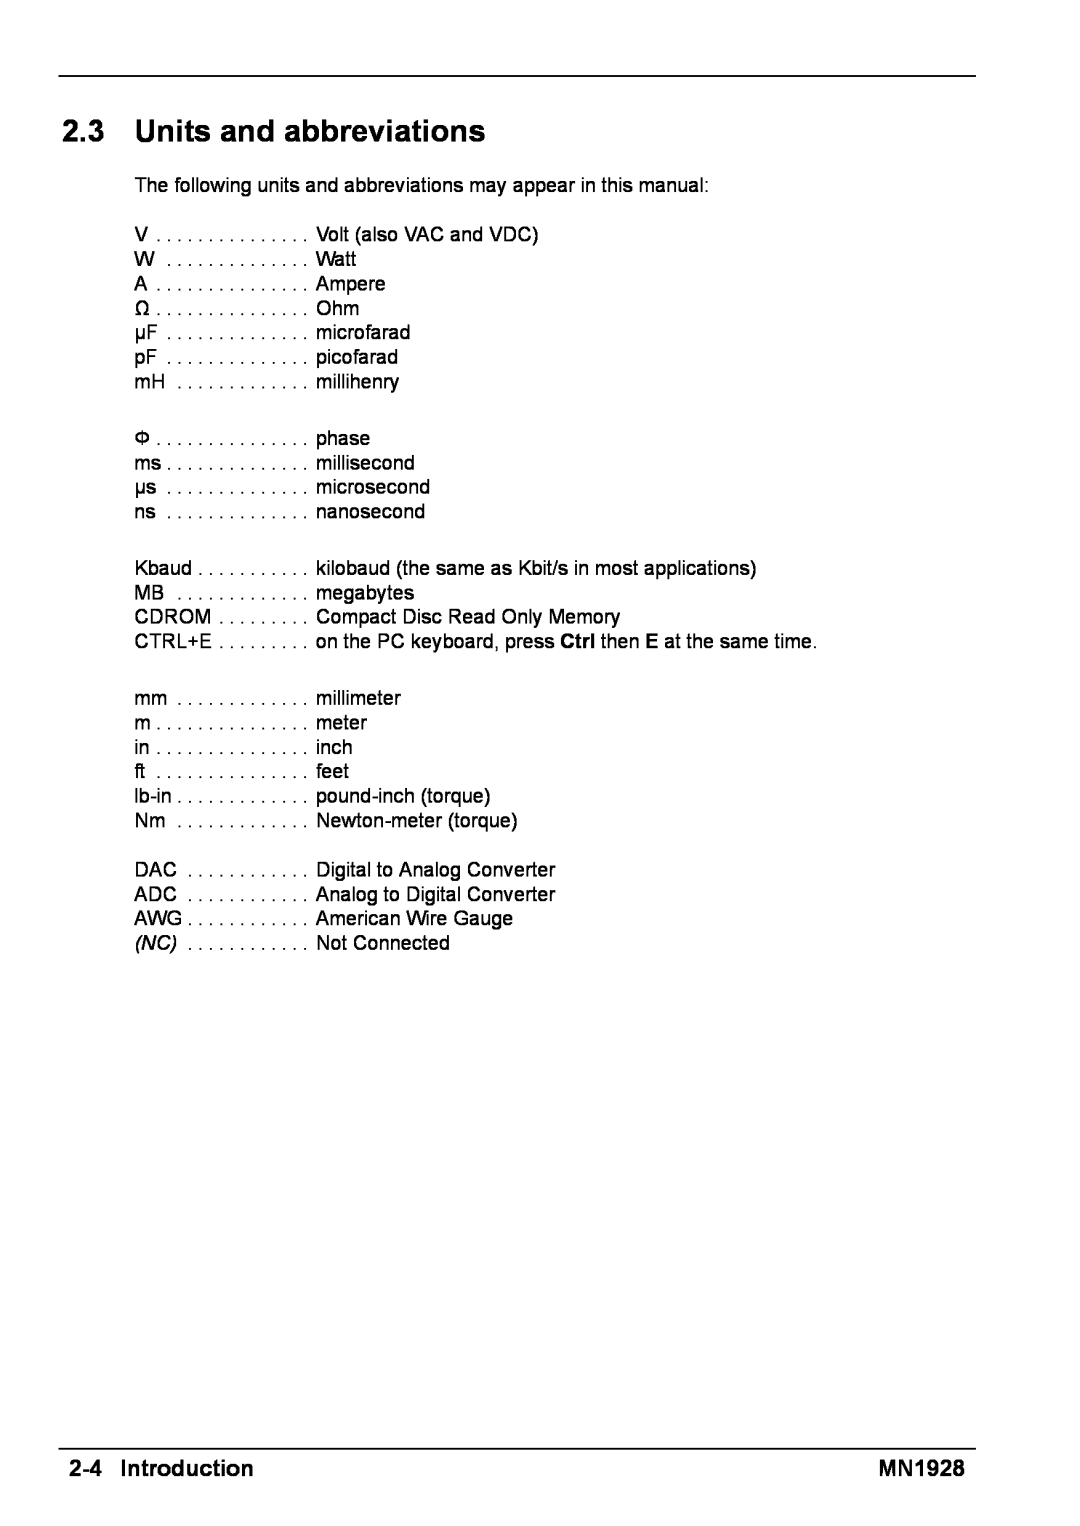 Baldor MN1928 installation manual Units and abbreviations, 2-4Introduction 